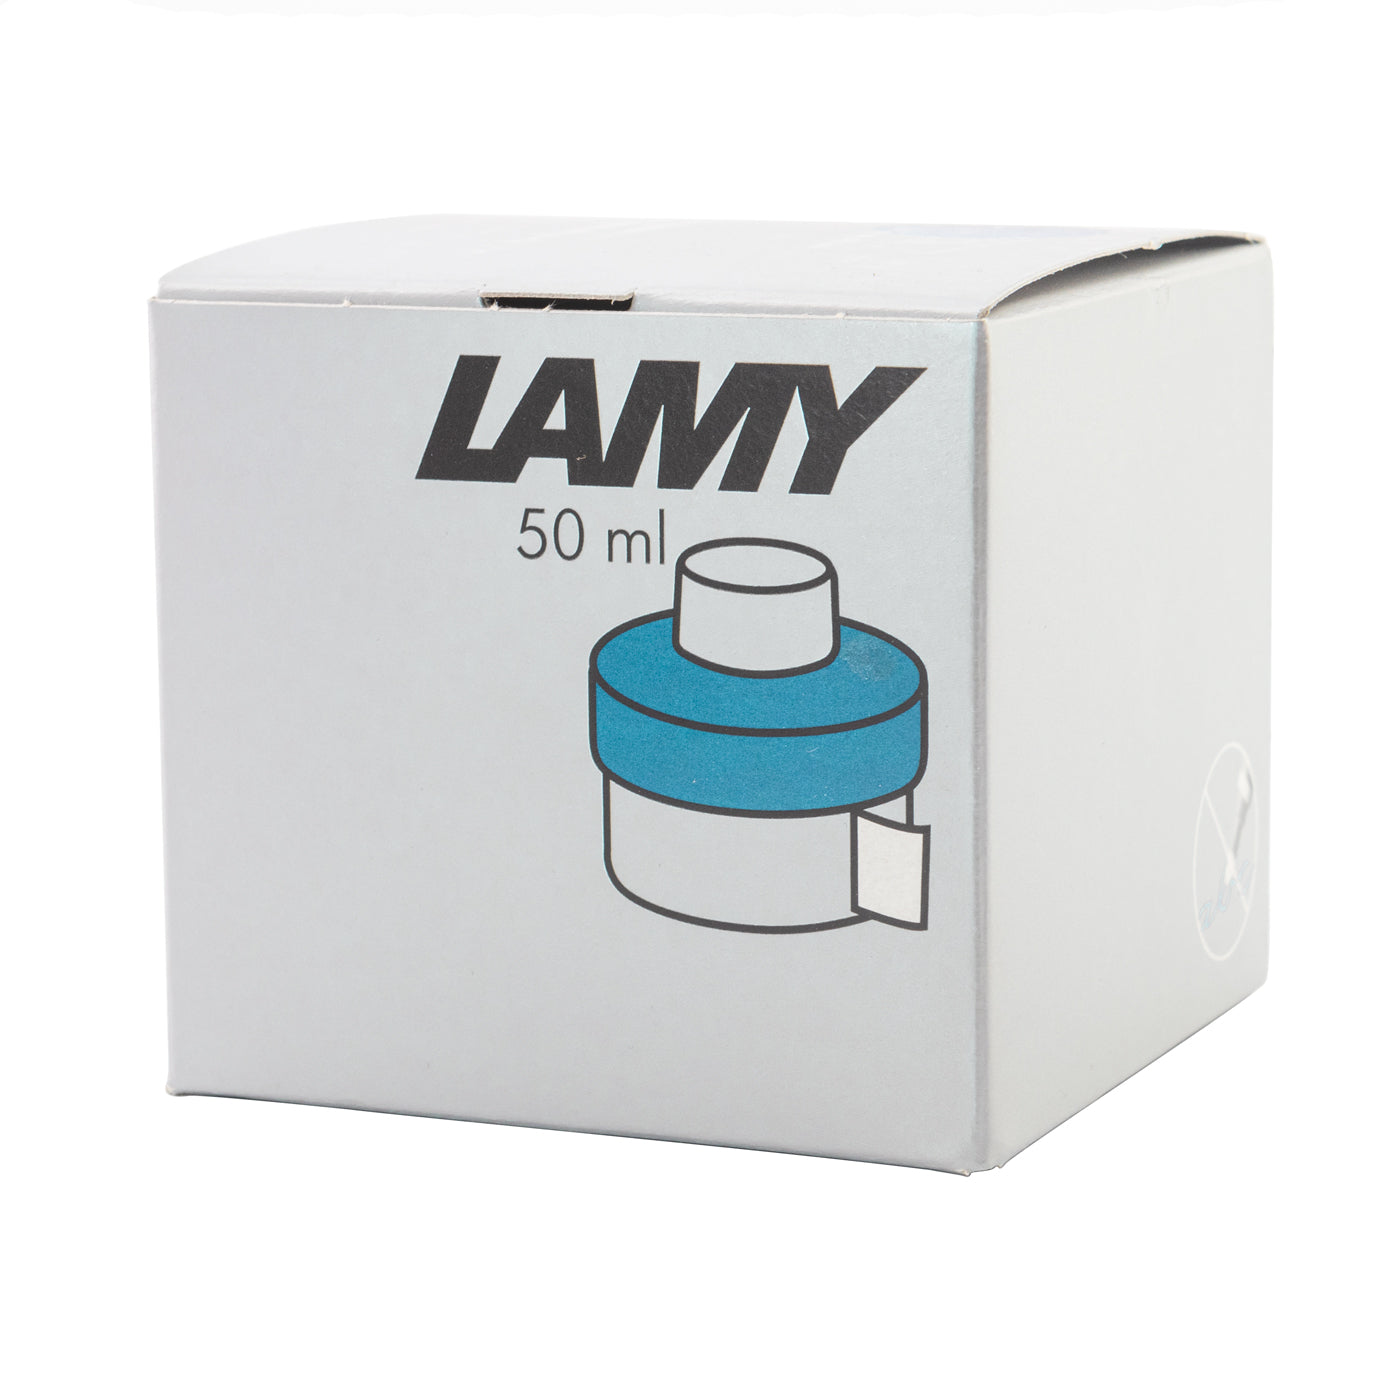 Lamy Ink - Turquoise